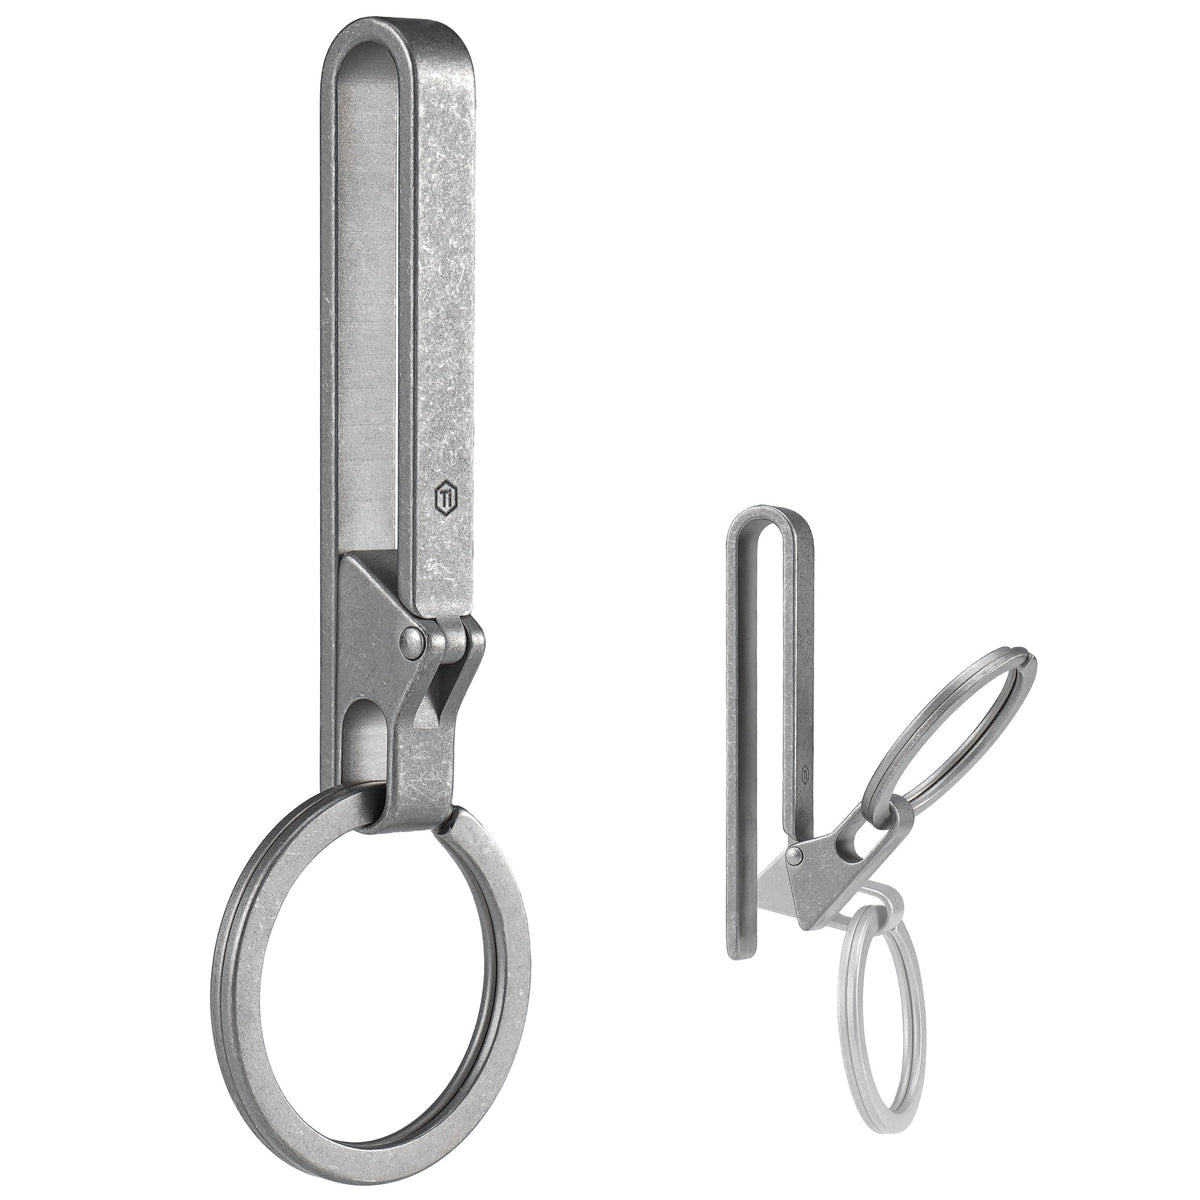 KM23 Titanium Alloy Belt Keychain